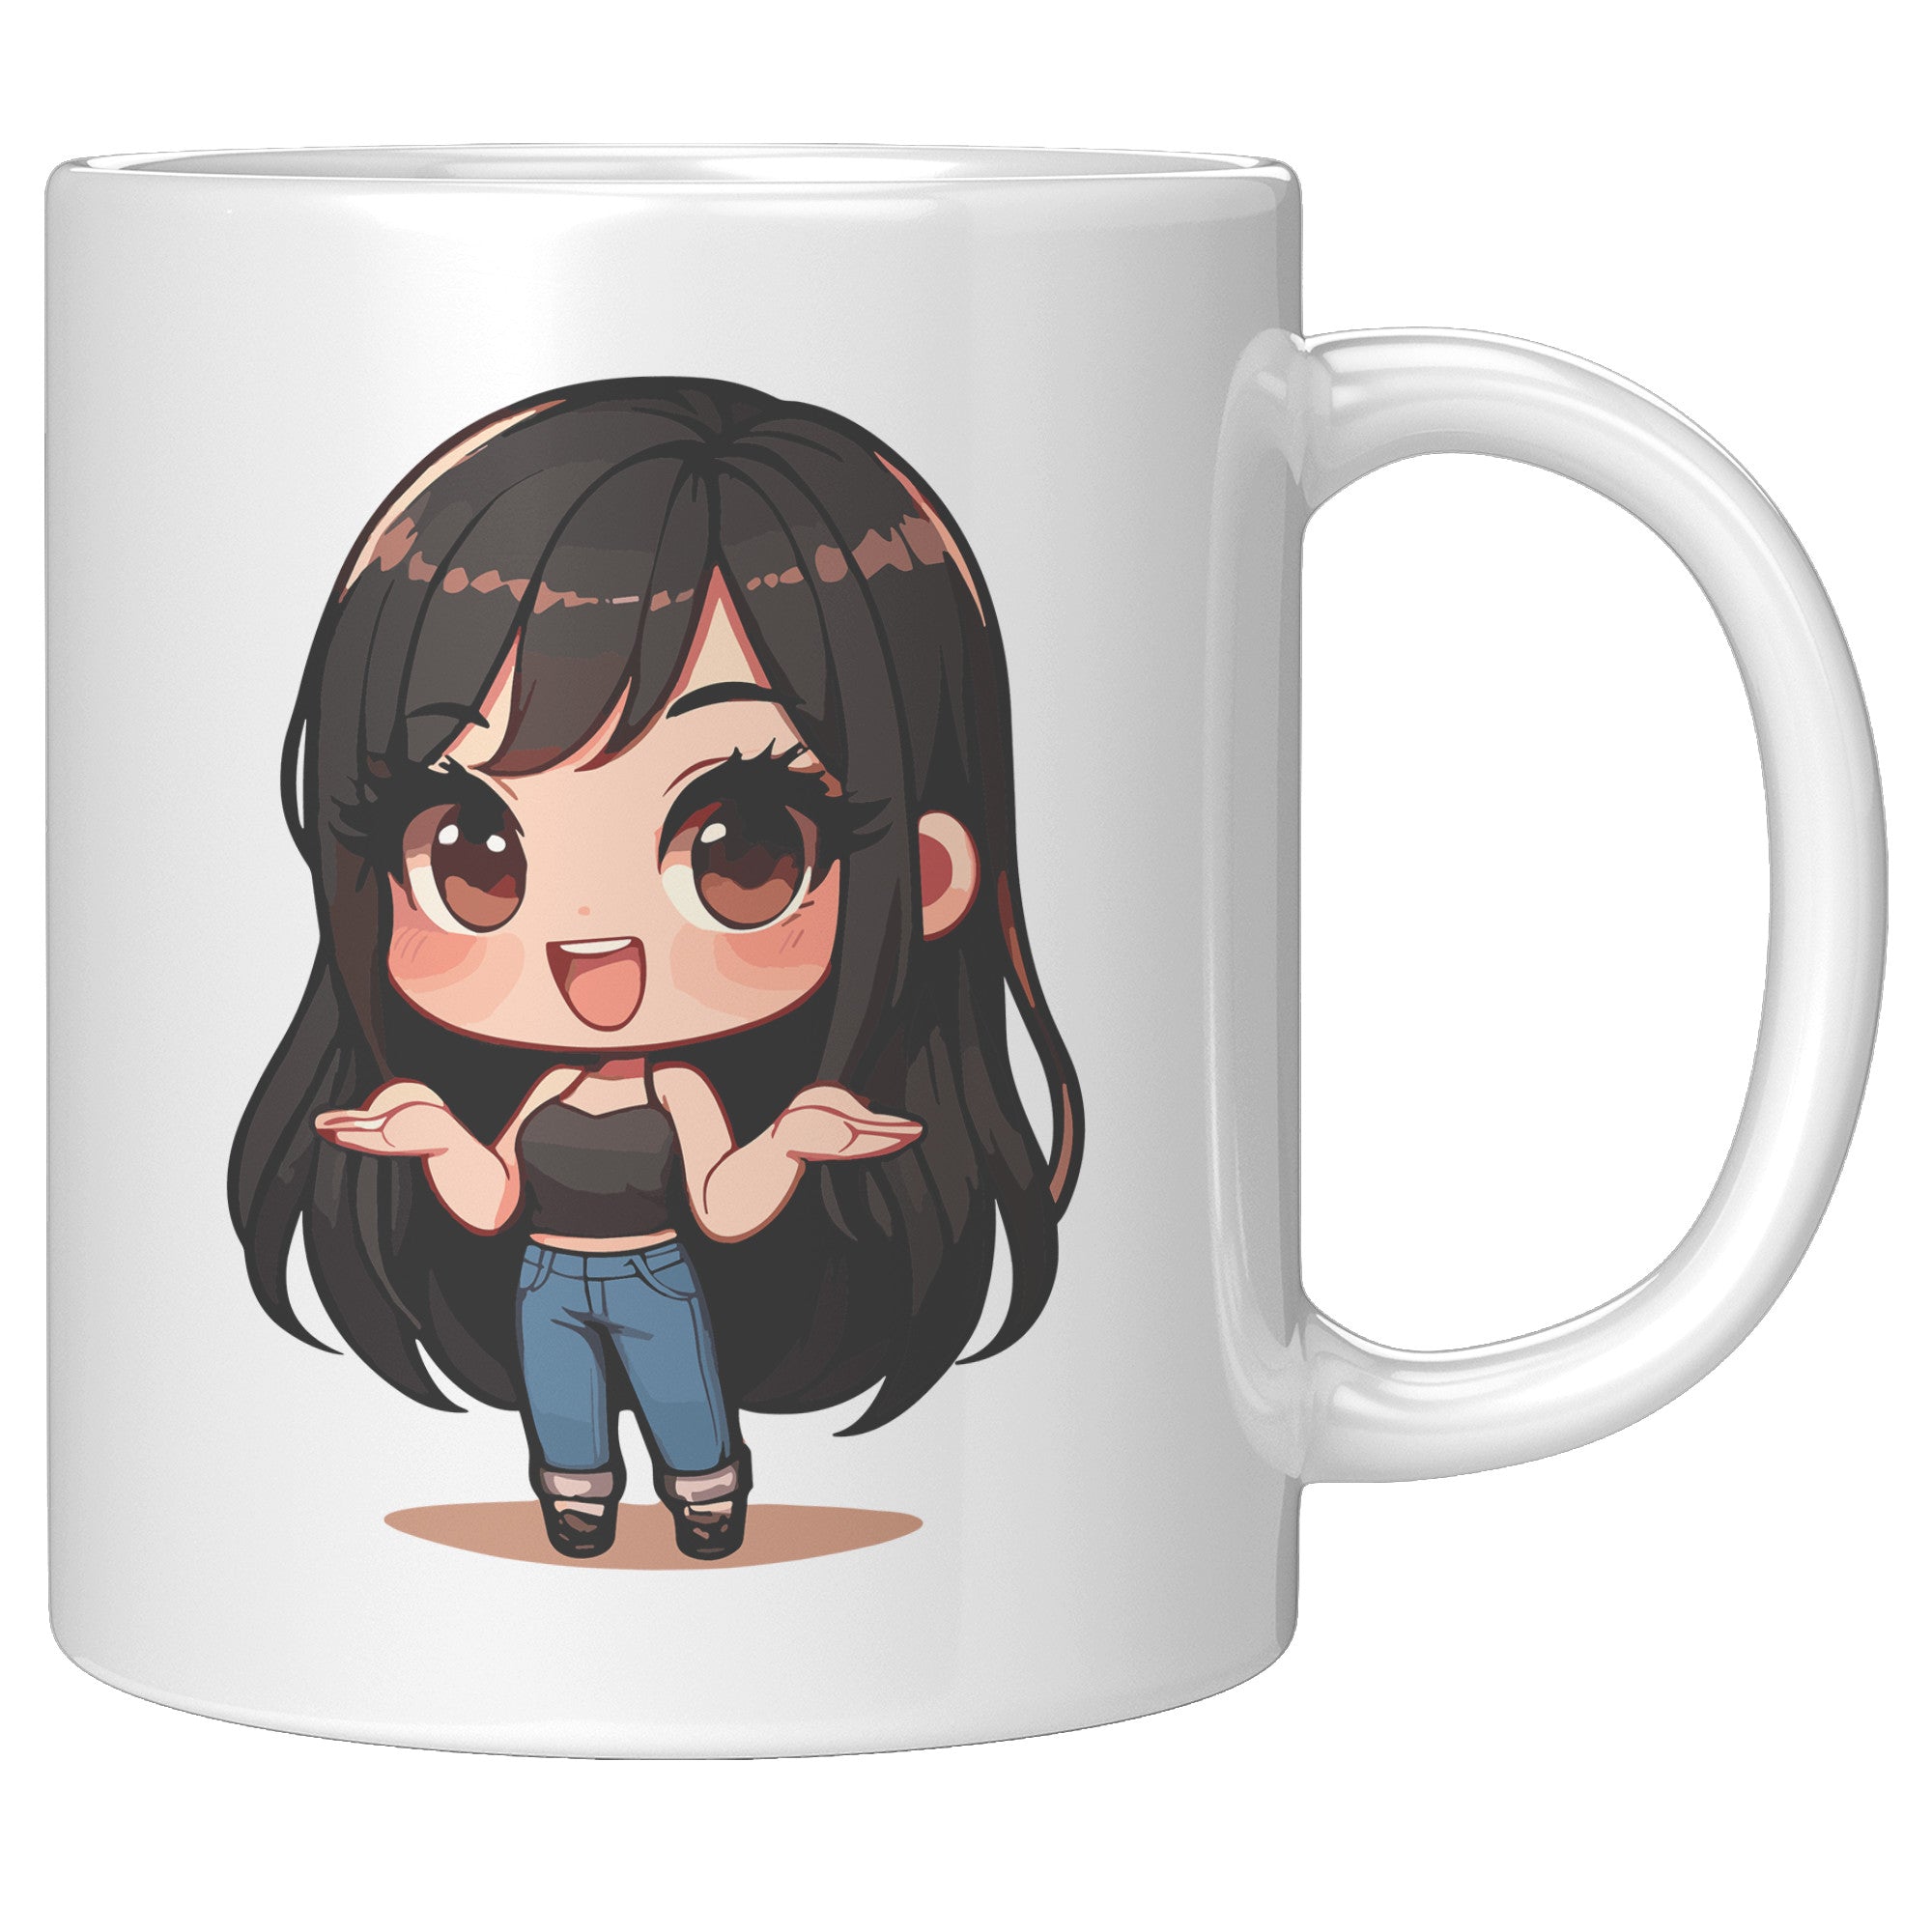 "Marites Gossip Queen Coffee Mug - Cute Cartoon 'Ano Ang Latest?' Cup - Perfect Chismosa Gift - Filipino Slang Tea Mug" - OO